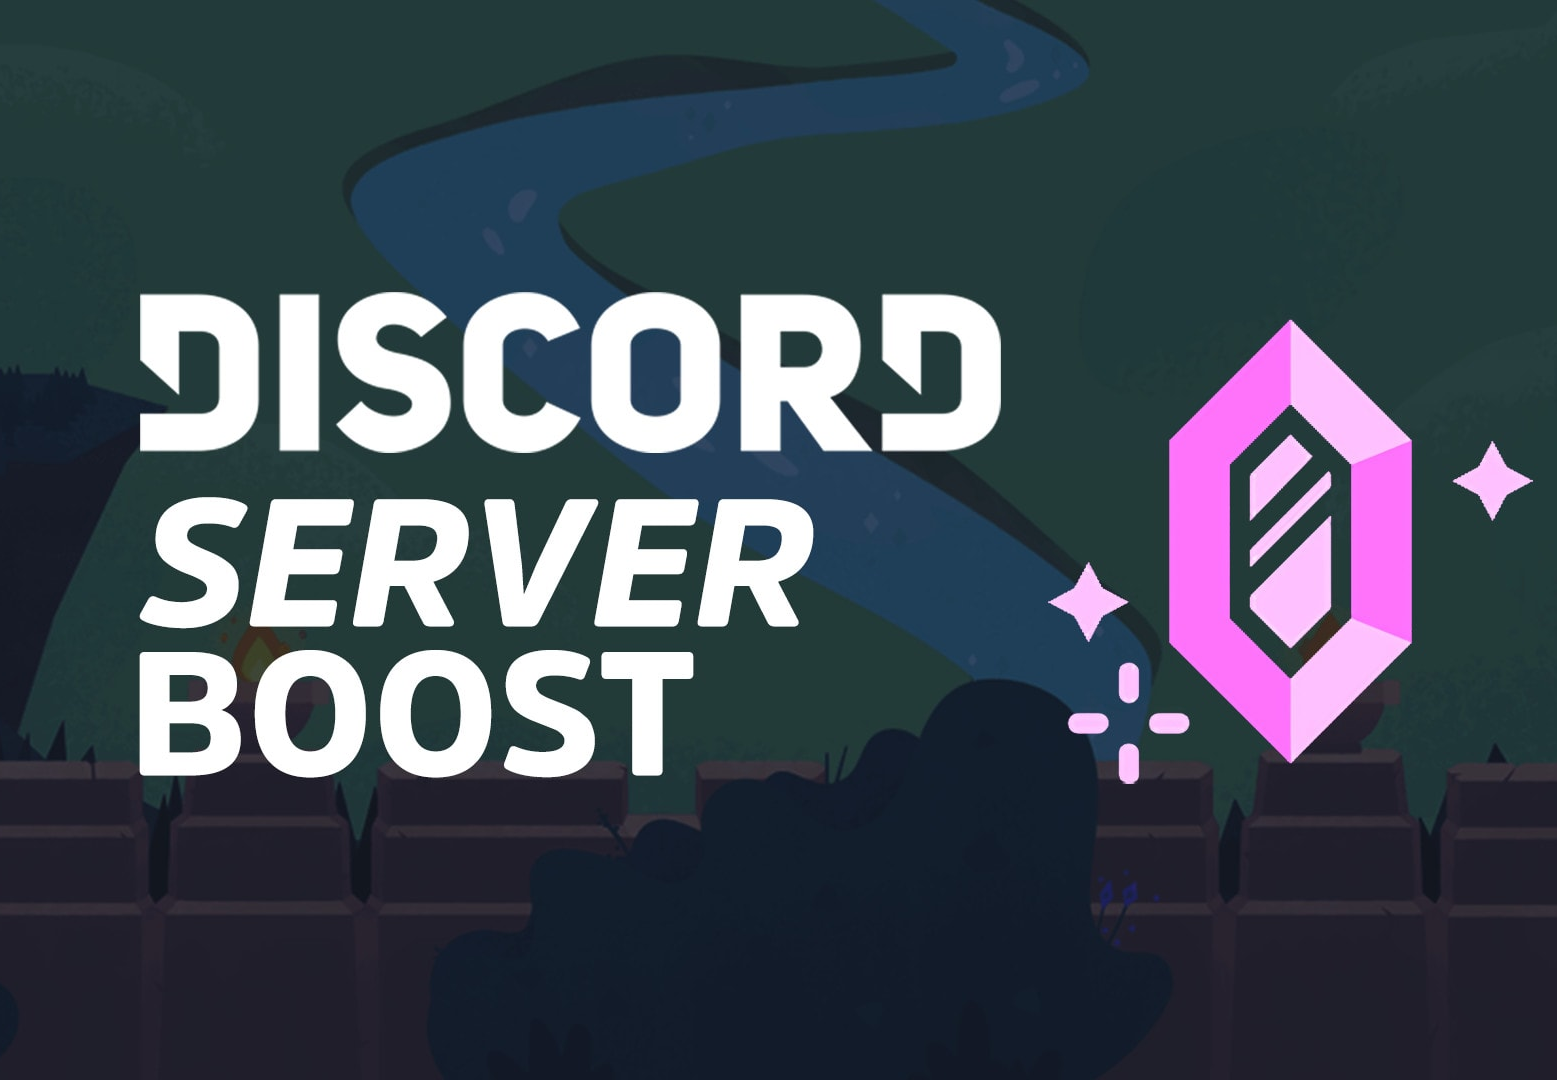 Discord Server - 14x Boost - 3 Months